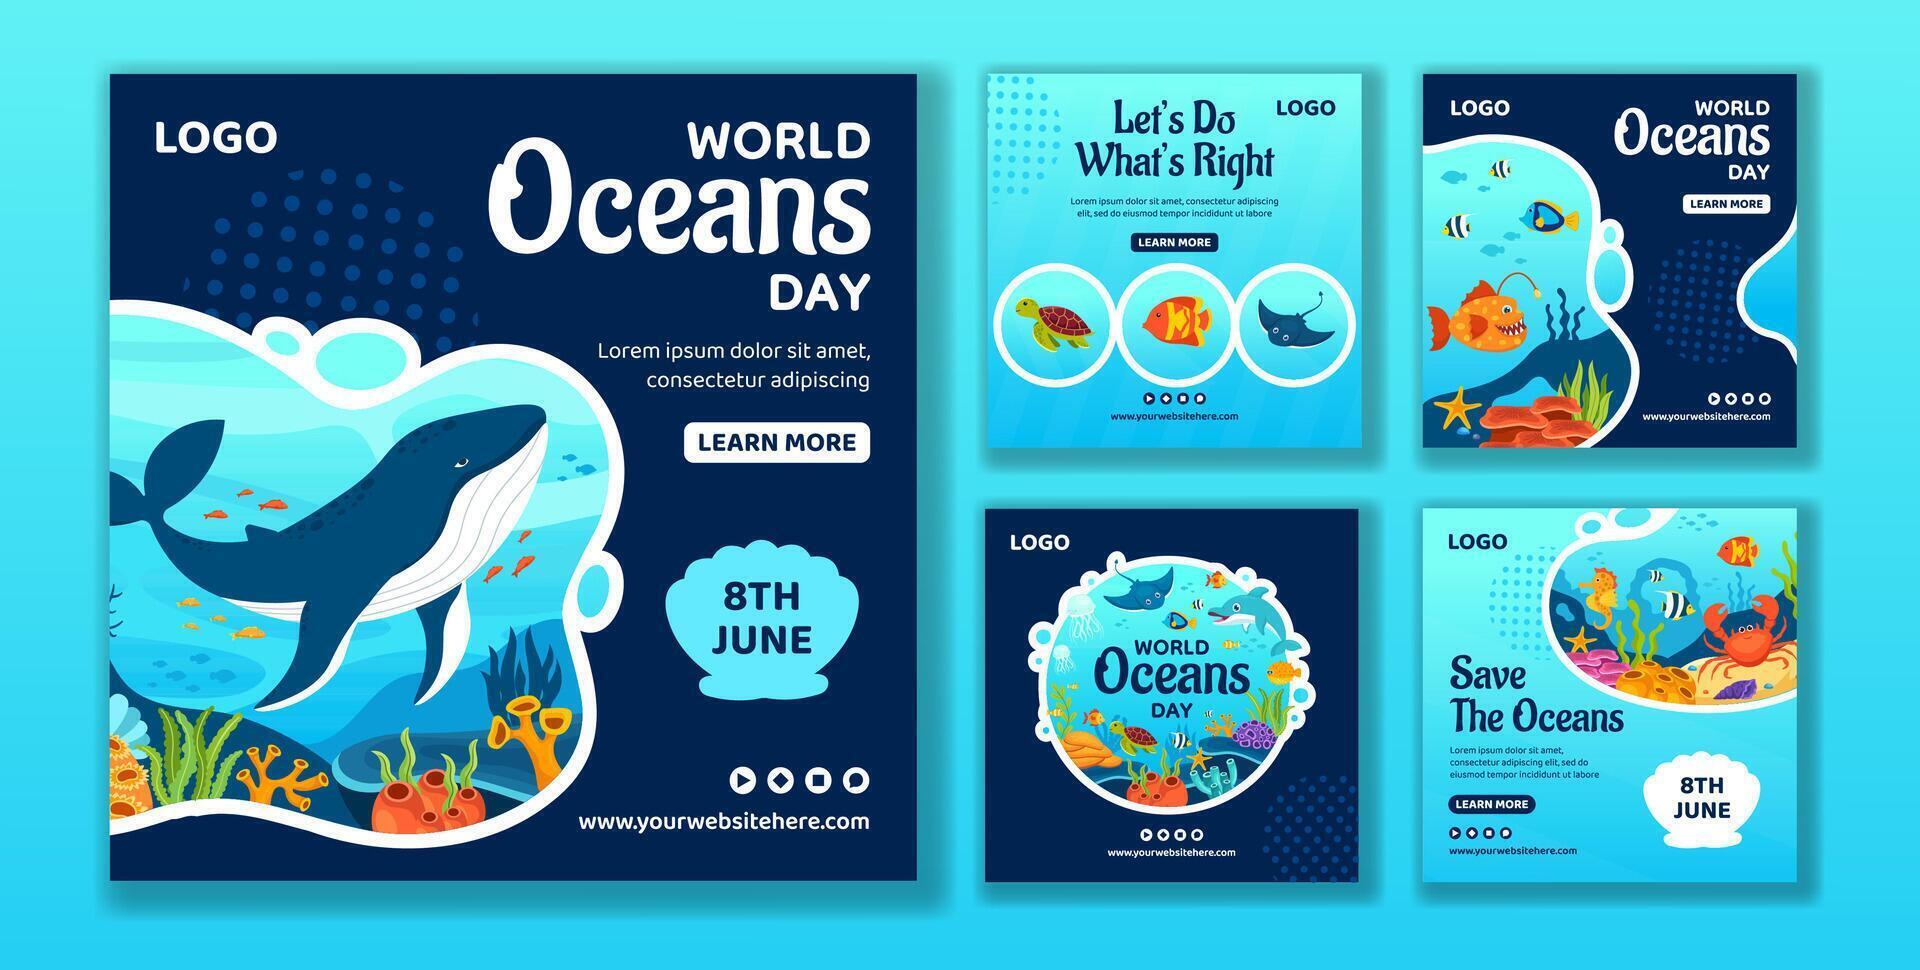 océanos día social medios de comunicación enviar plano dibujos animados mano dibujado plantillas antecedentes ilustración vector